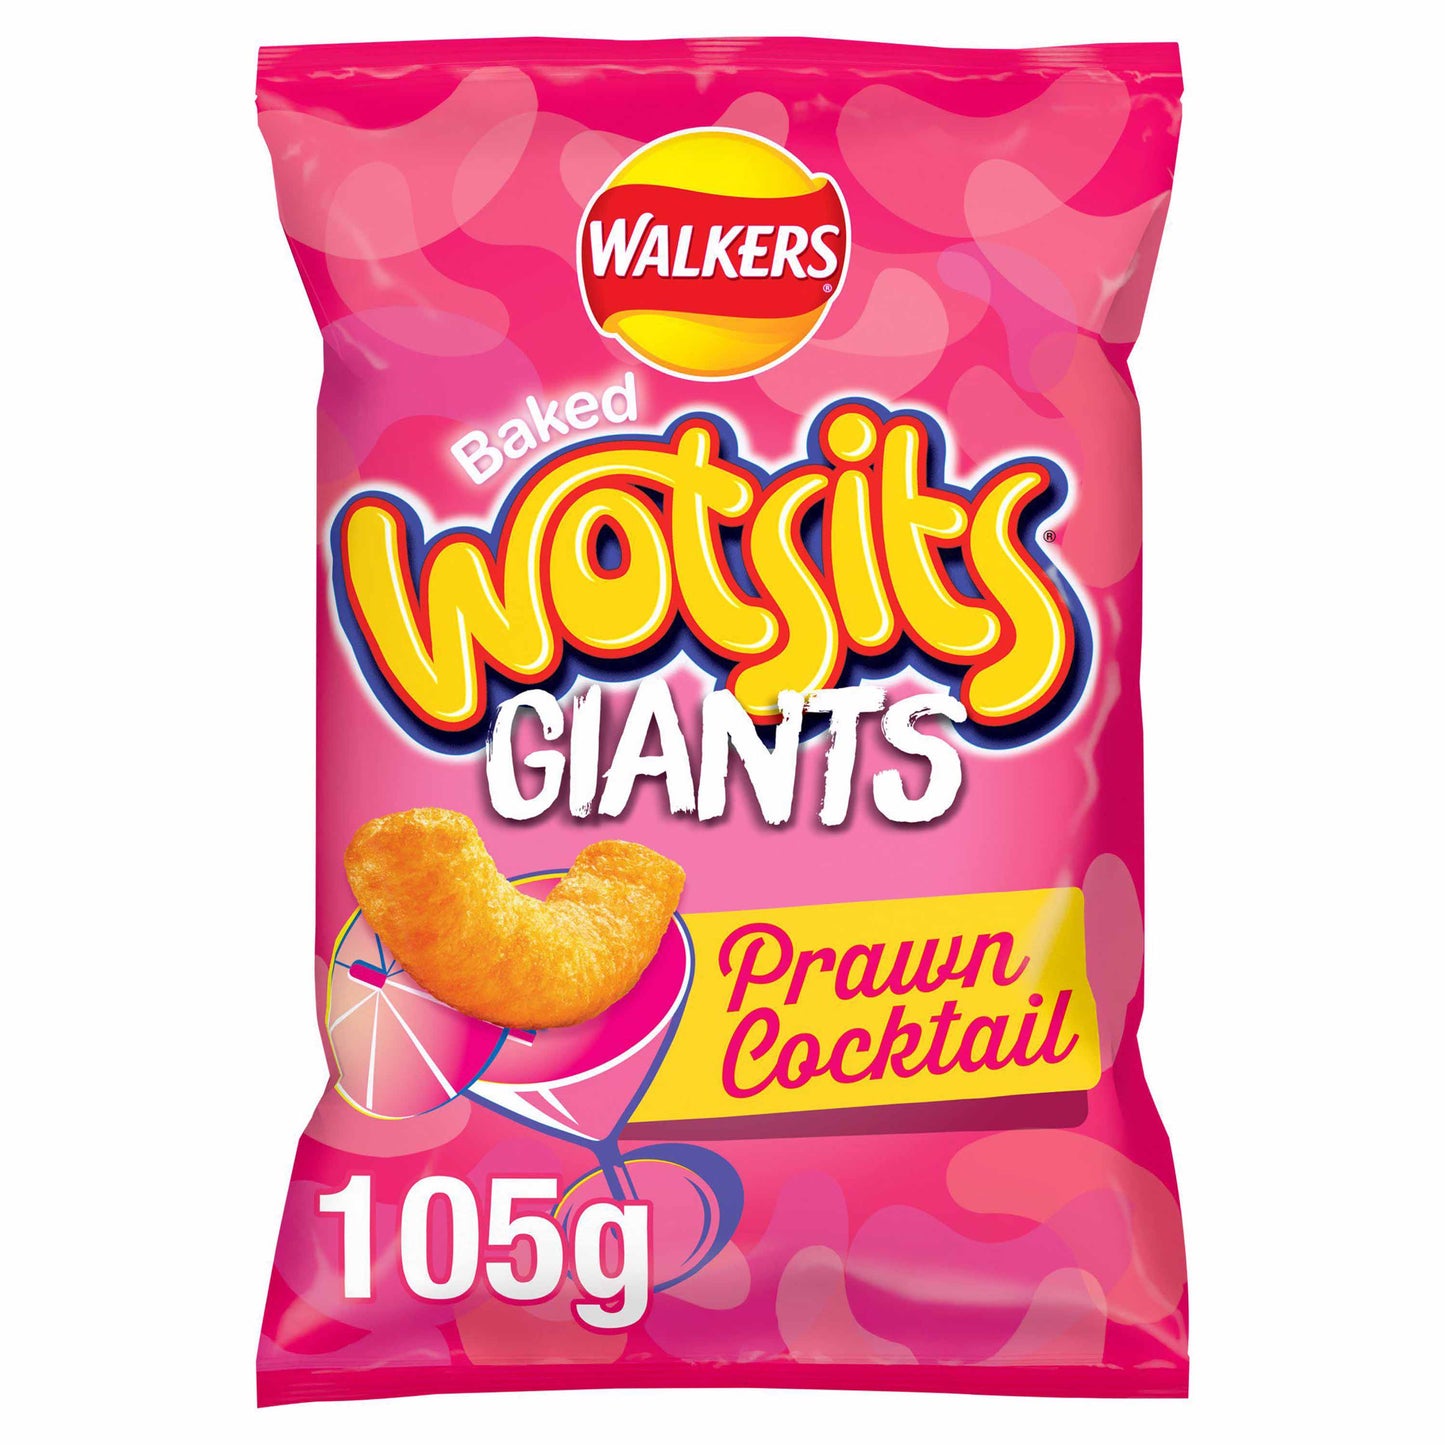 Walkers Wotsits Giants Prawn Cocktail Crisps - 105g (Sharing Bag) - British Snacks